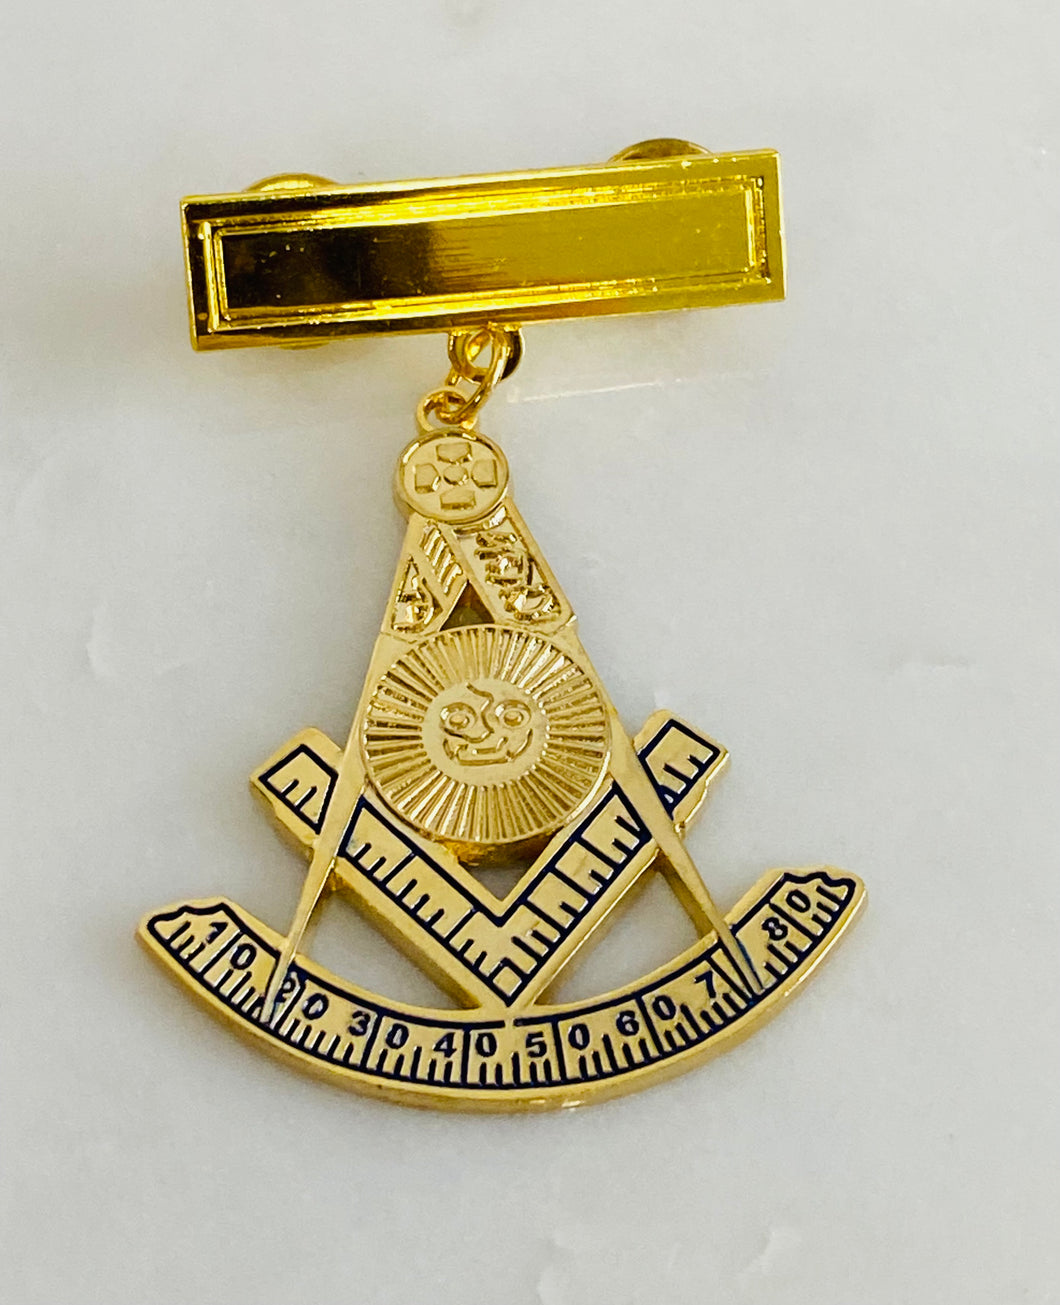 Past Master Medal jewel